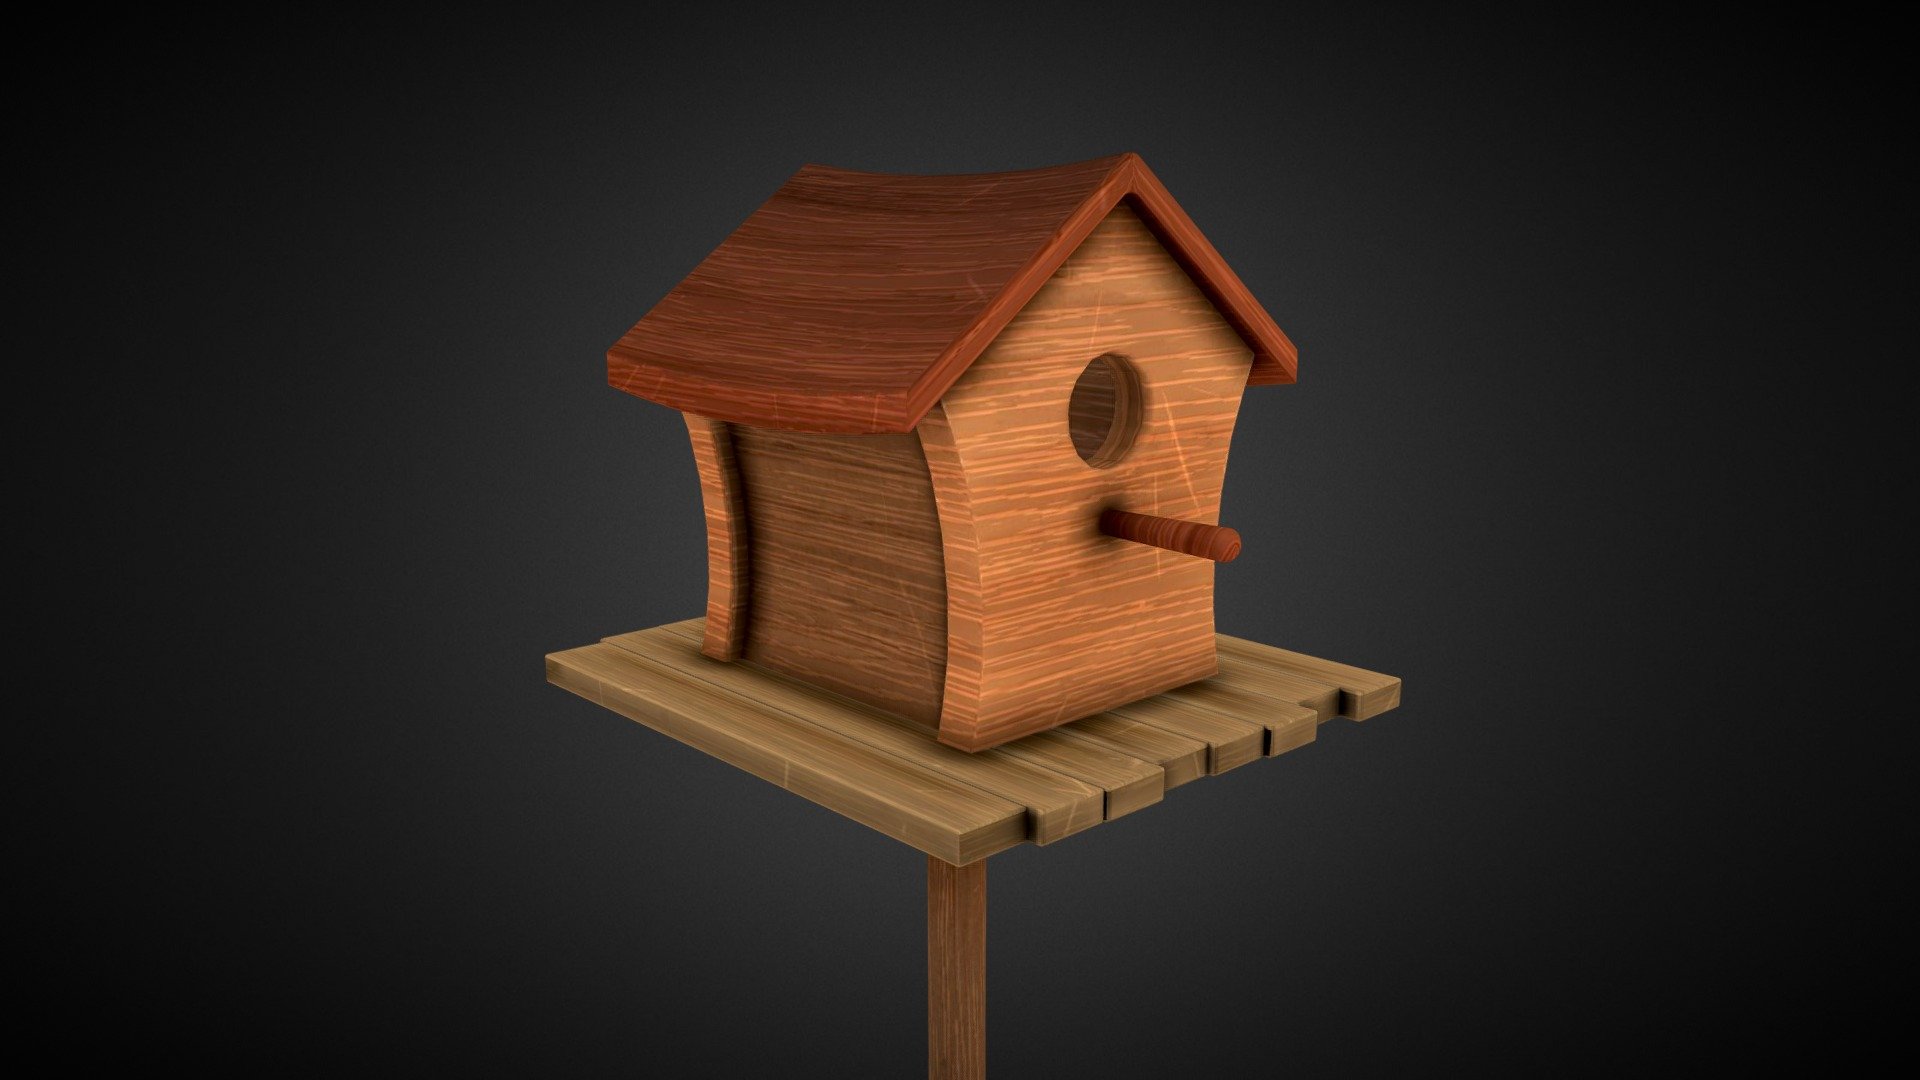 Stylized Birdhouse 3D Low-Poly Model
Blender / Substance Painter - Birdhouse - 3D model by Emre Alaca (@emrealaca3d) 3d model